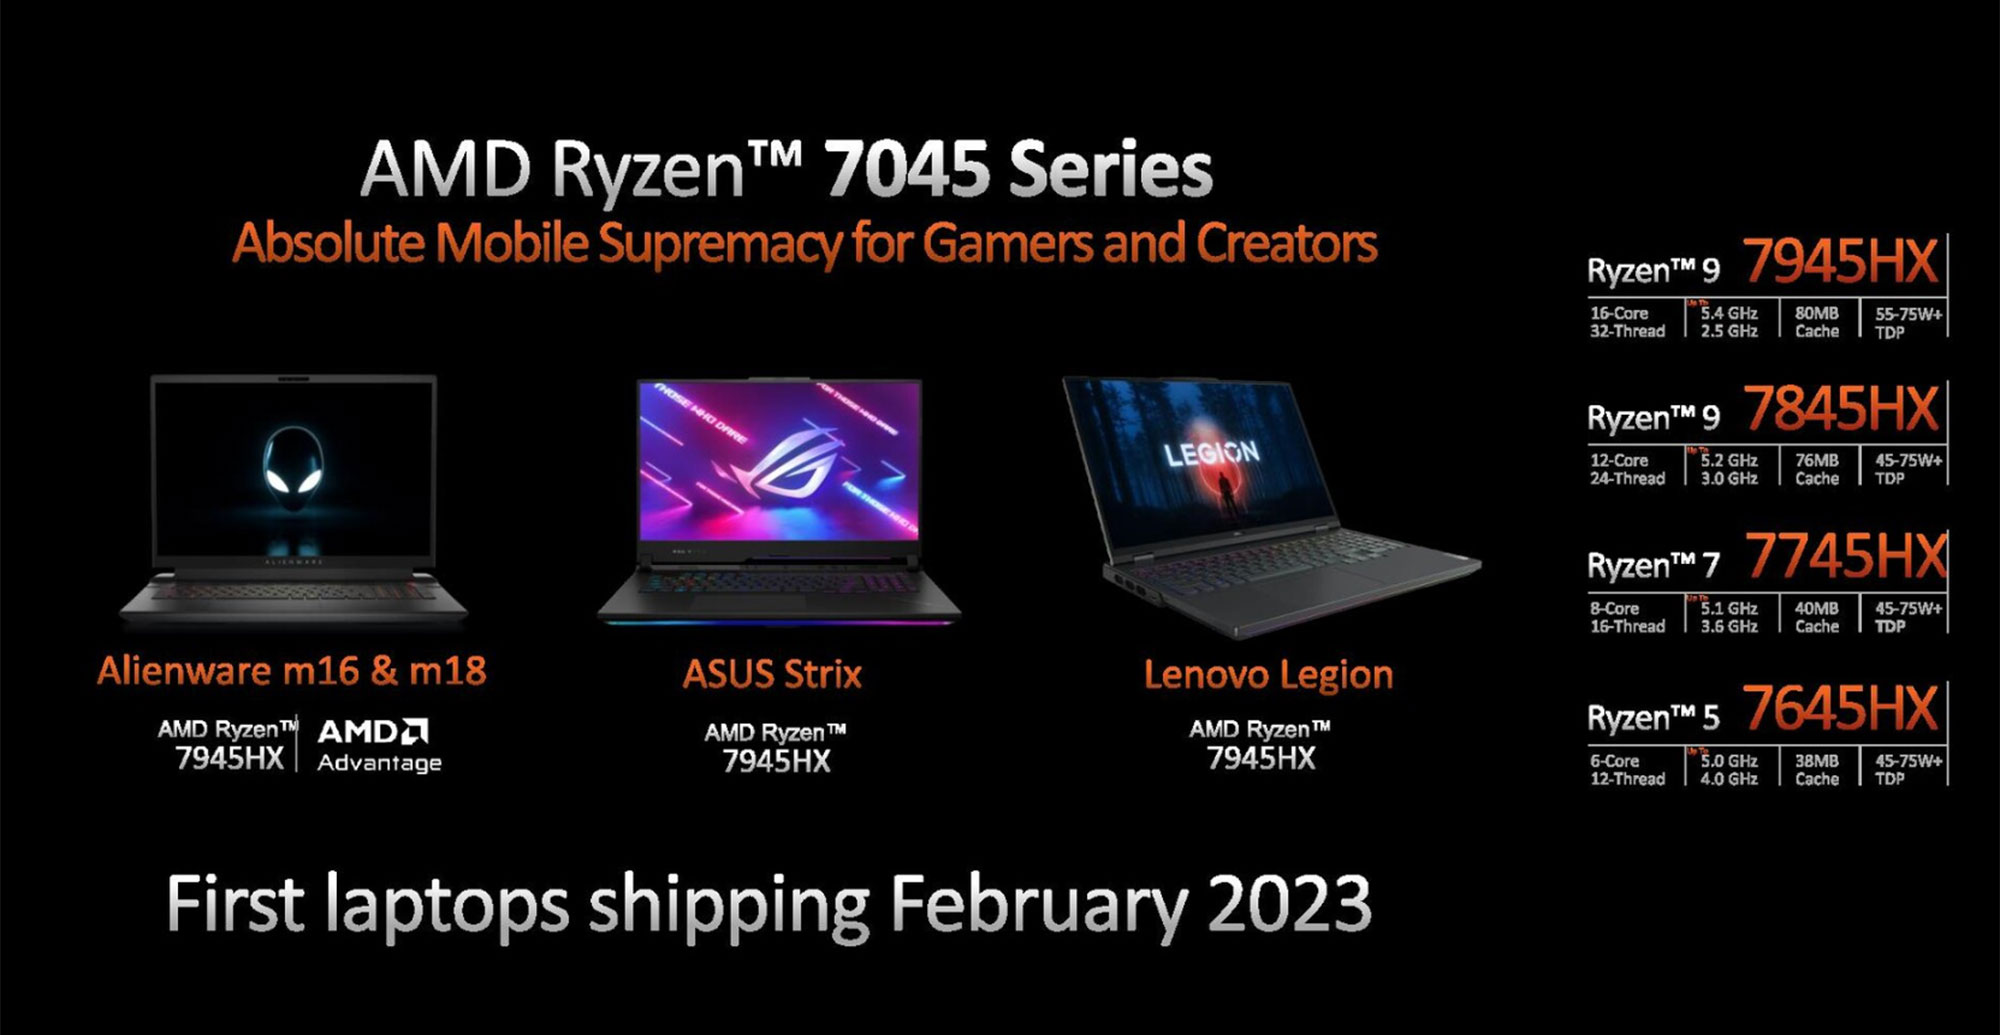 Yoga 7 (16” AMD)  2-in-1 Laptop with AMD Ryzen™ 7000 Processor